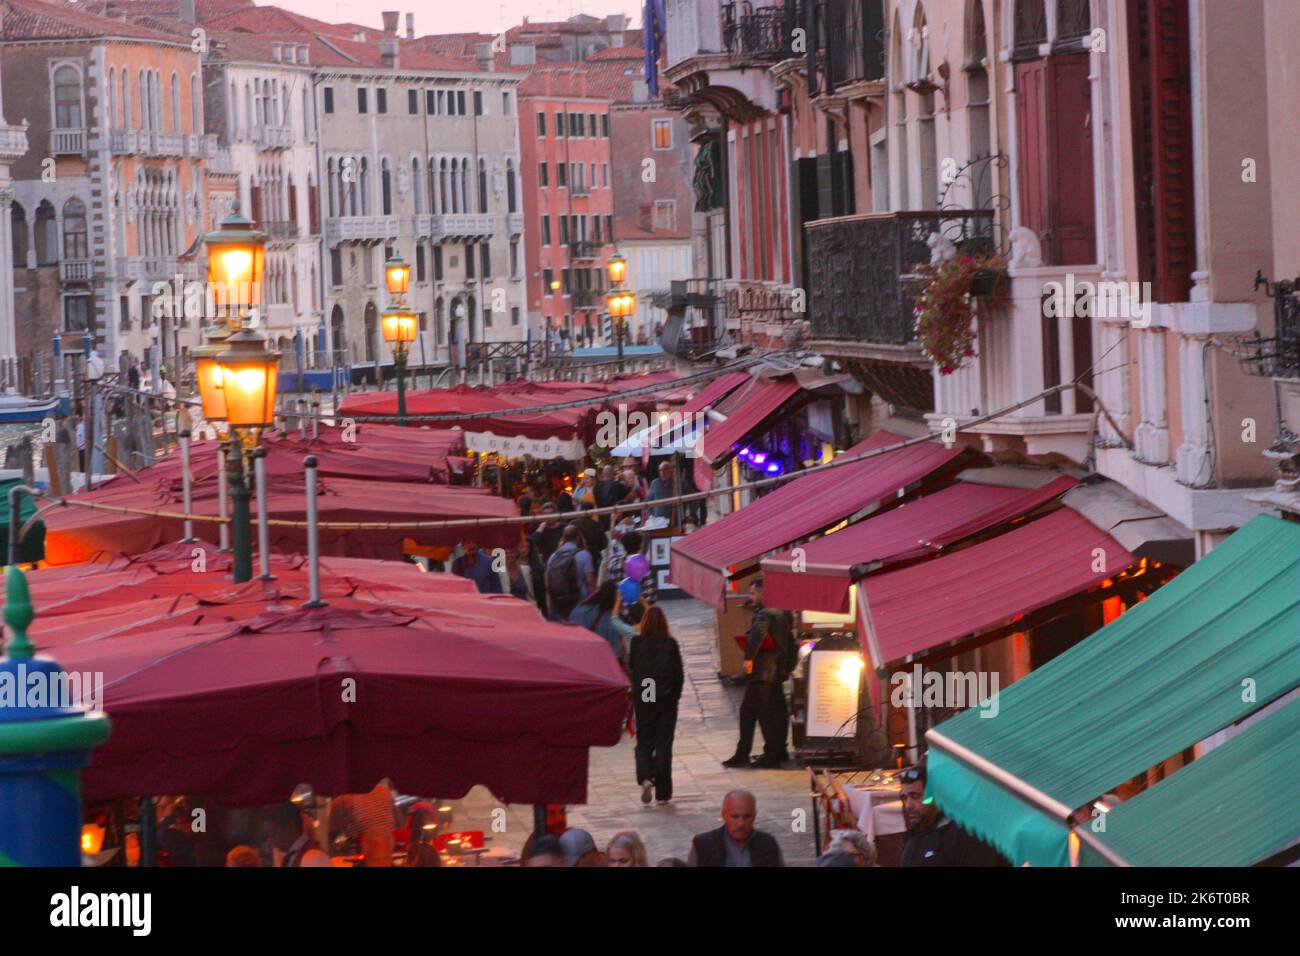 Restaurants at sunset near Rialto Bridge in Venice Stock Photo